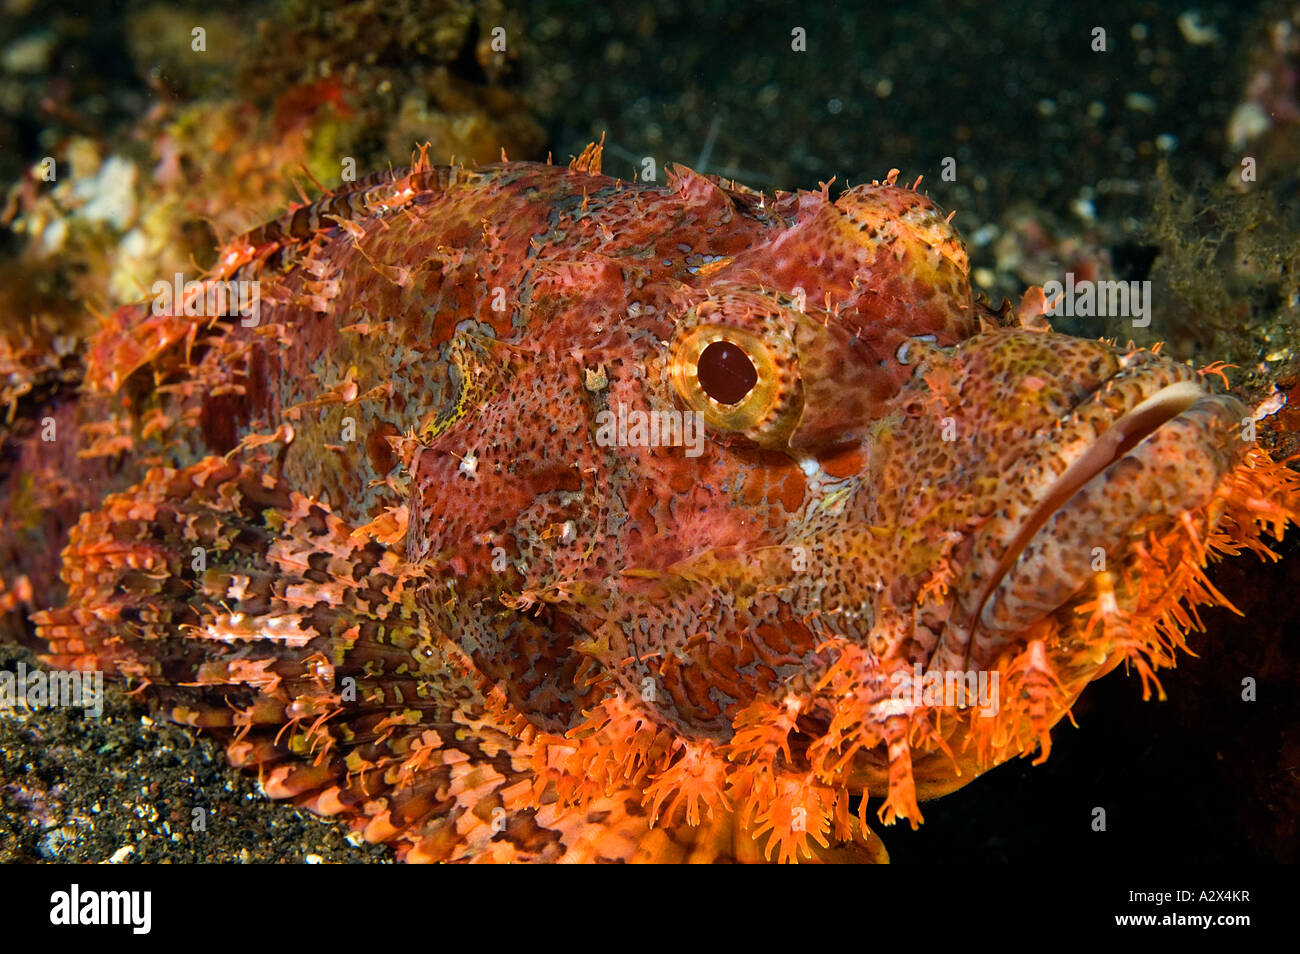 Tassled scorpionfish, Scorpaenopsis oxycephala, Bali Indonesia. Stock Photo